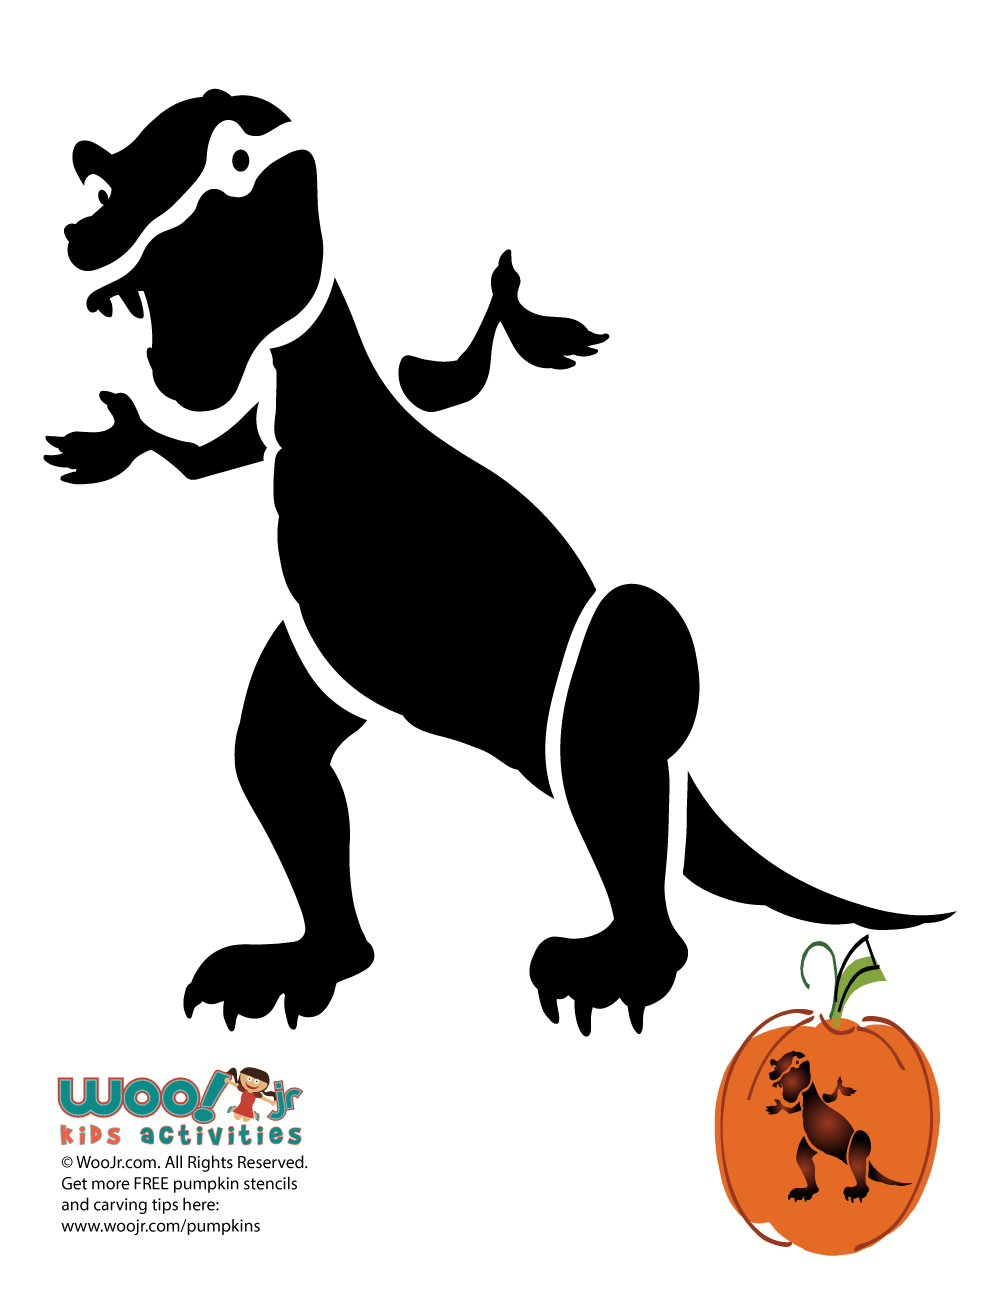 Dinosaur stencils 6 Woo Jr Kids Activities Children s Publishing